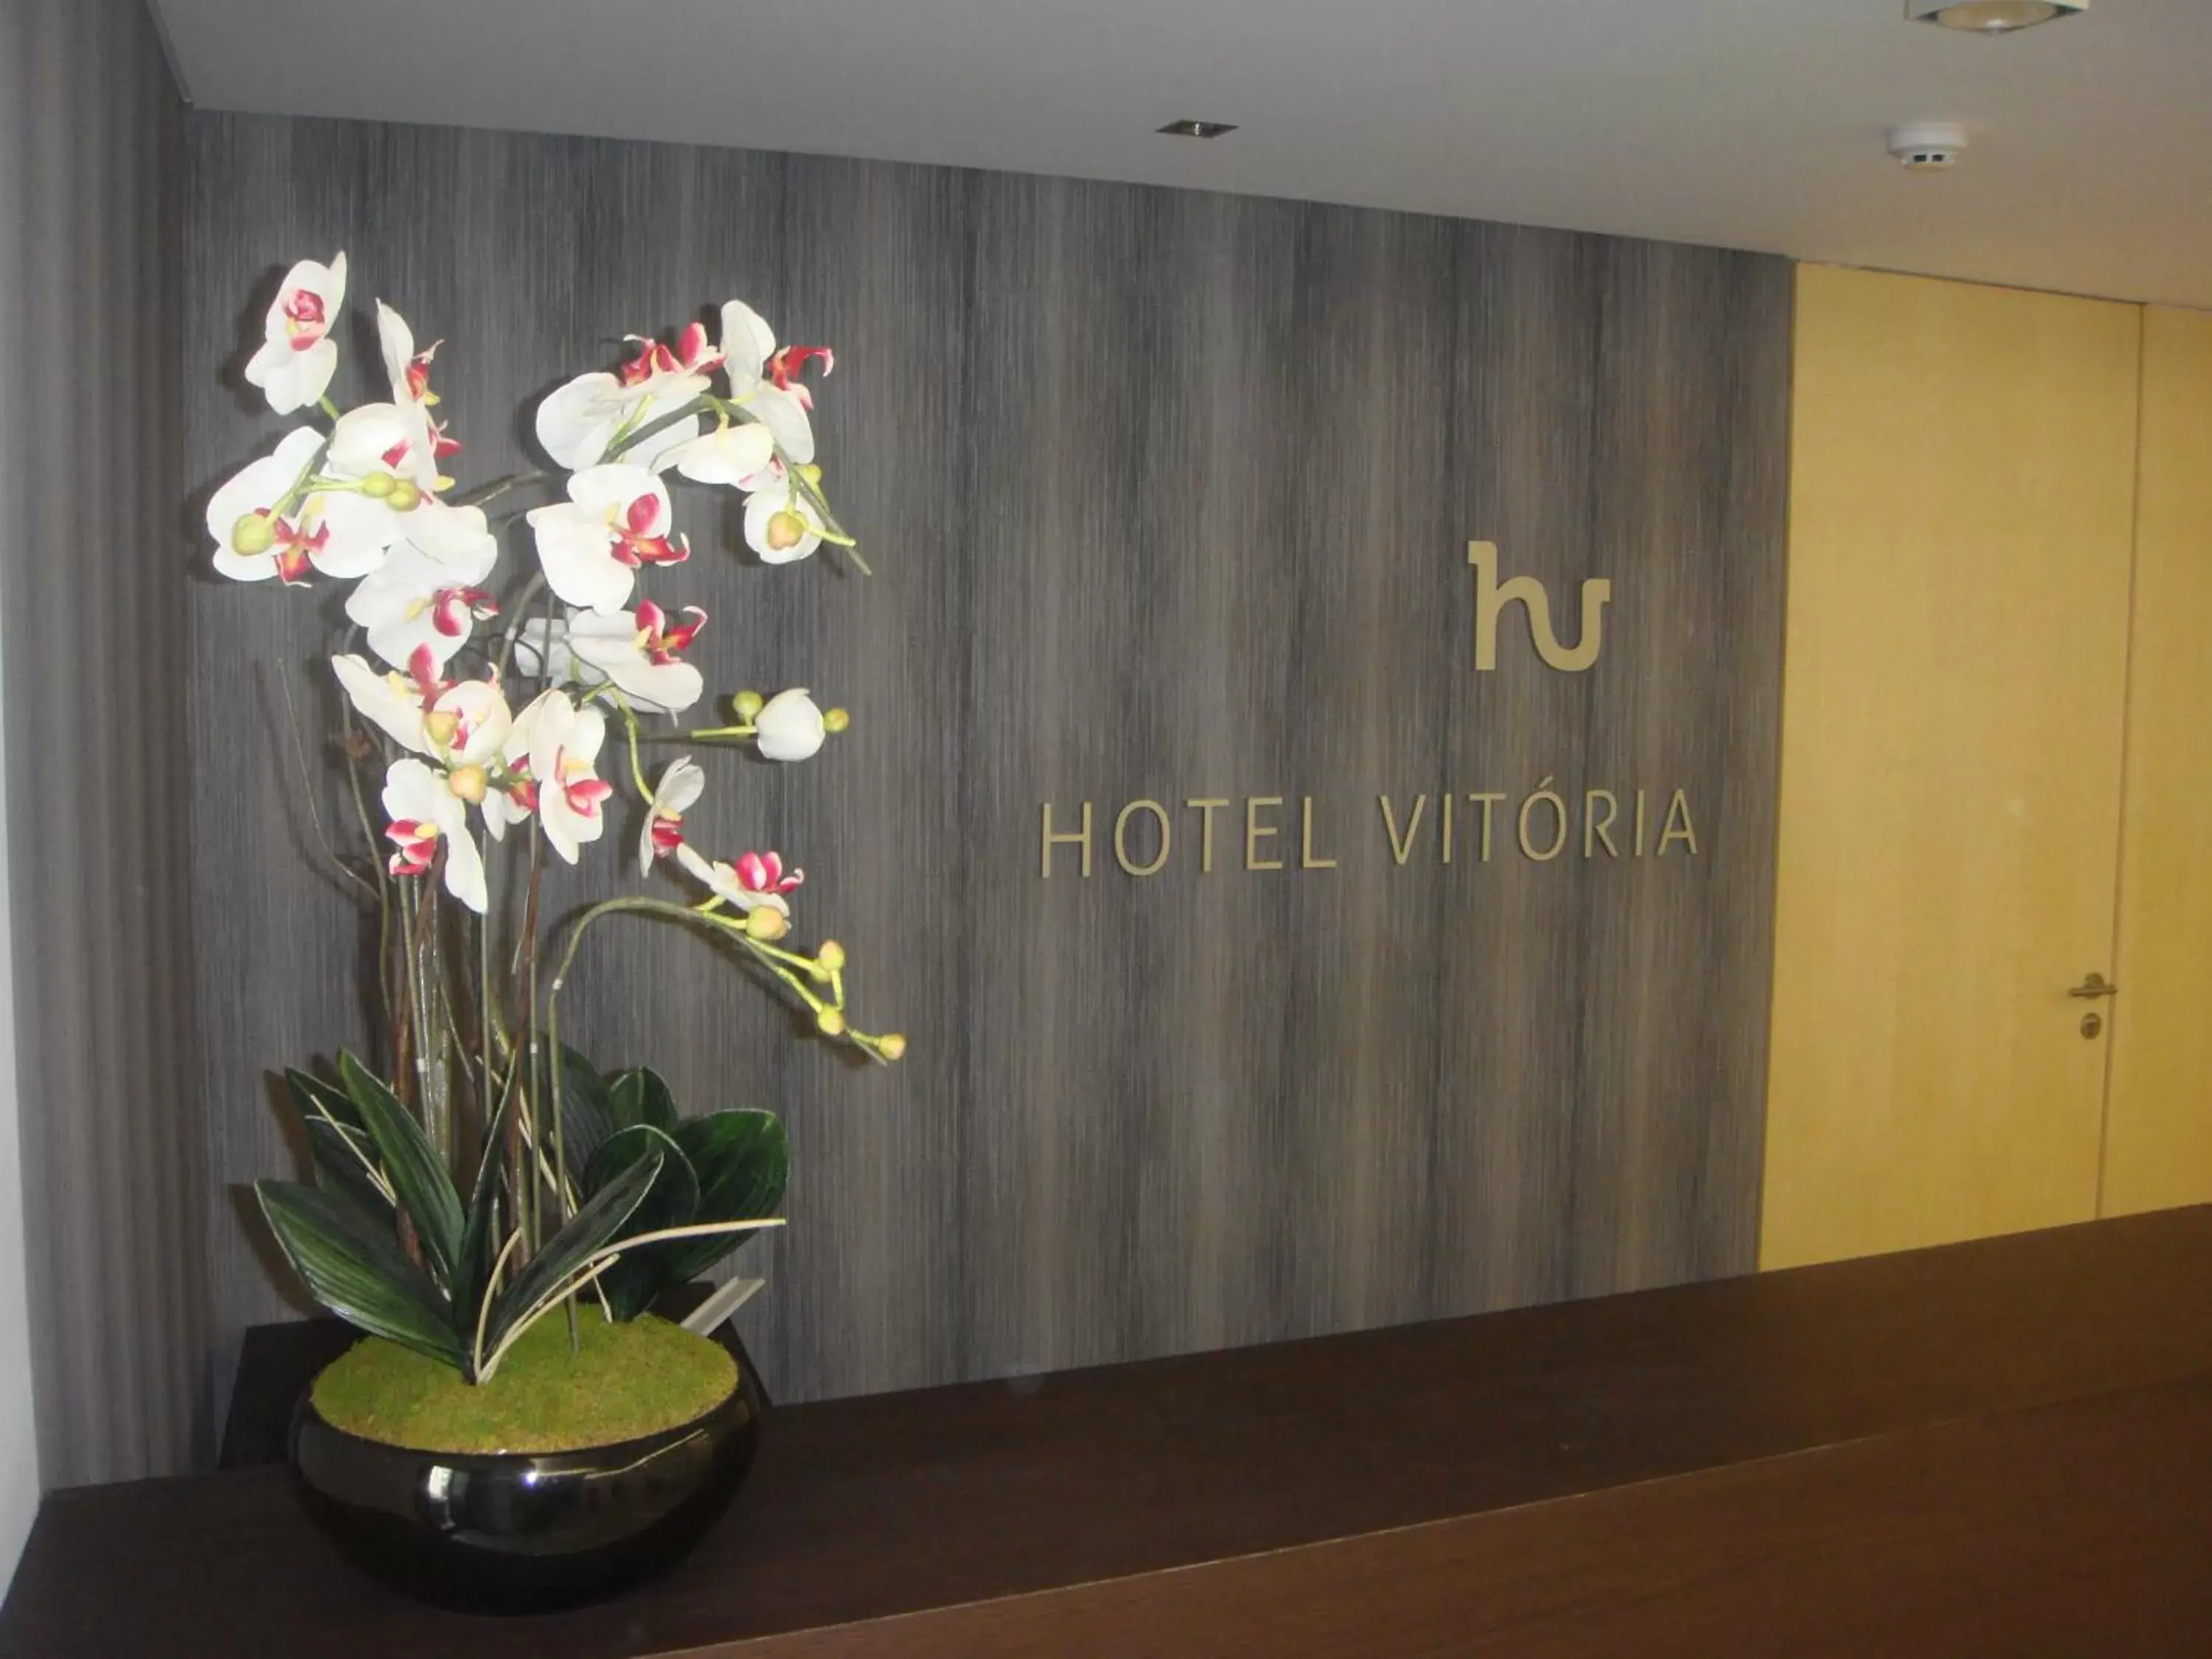 Property logo or sign in Hotel Vitória